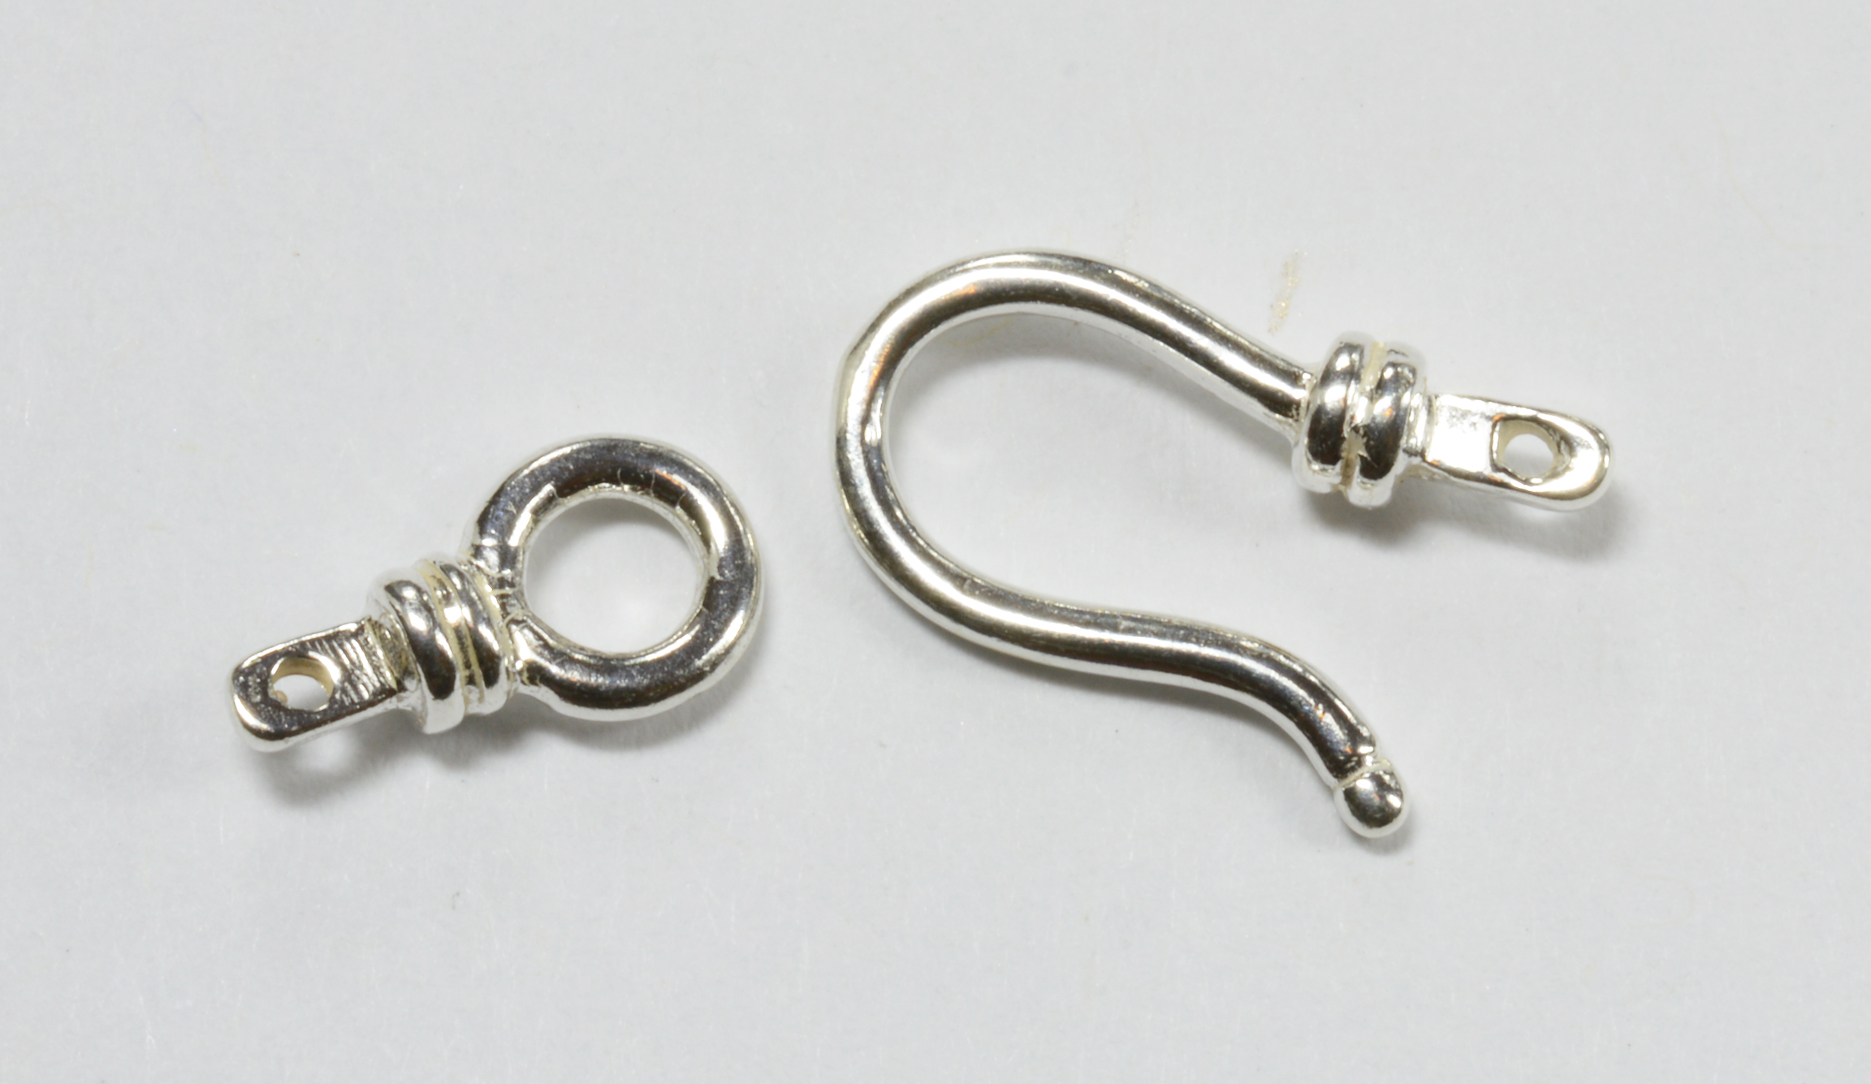 Hook & Eye Clasp for Necklace or Bracelet Add-on